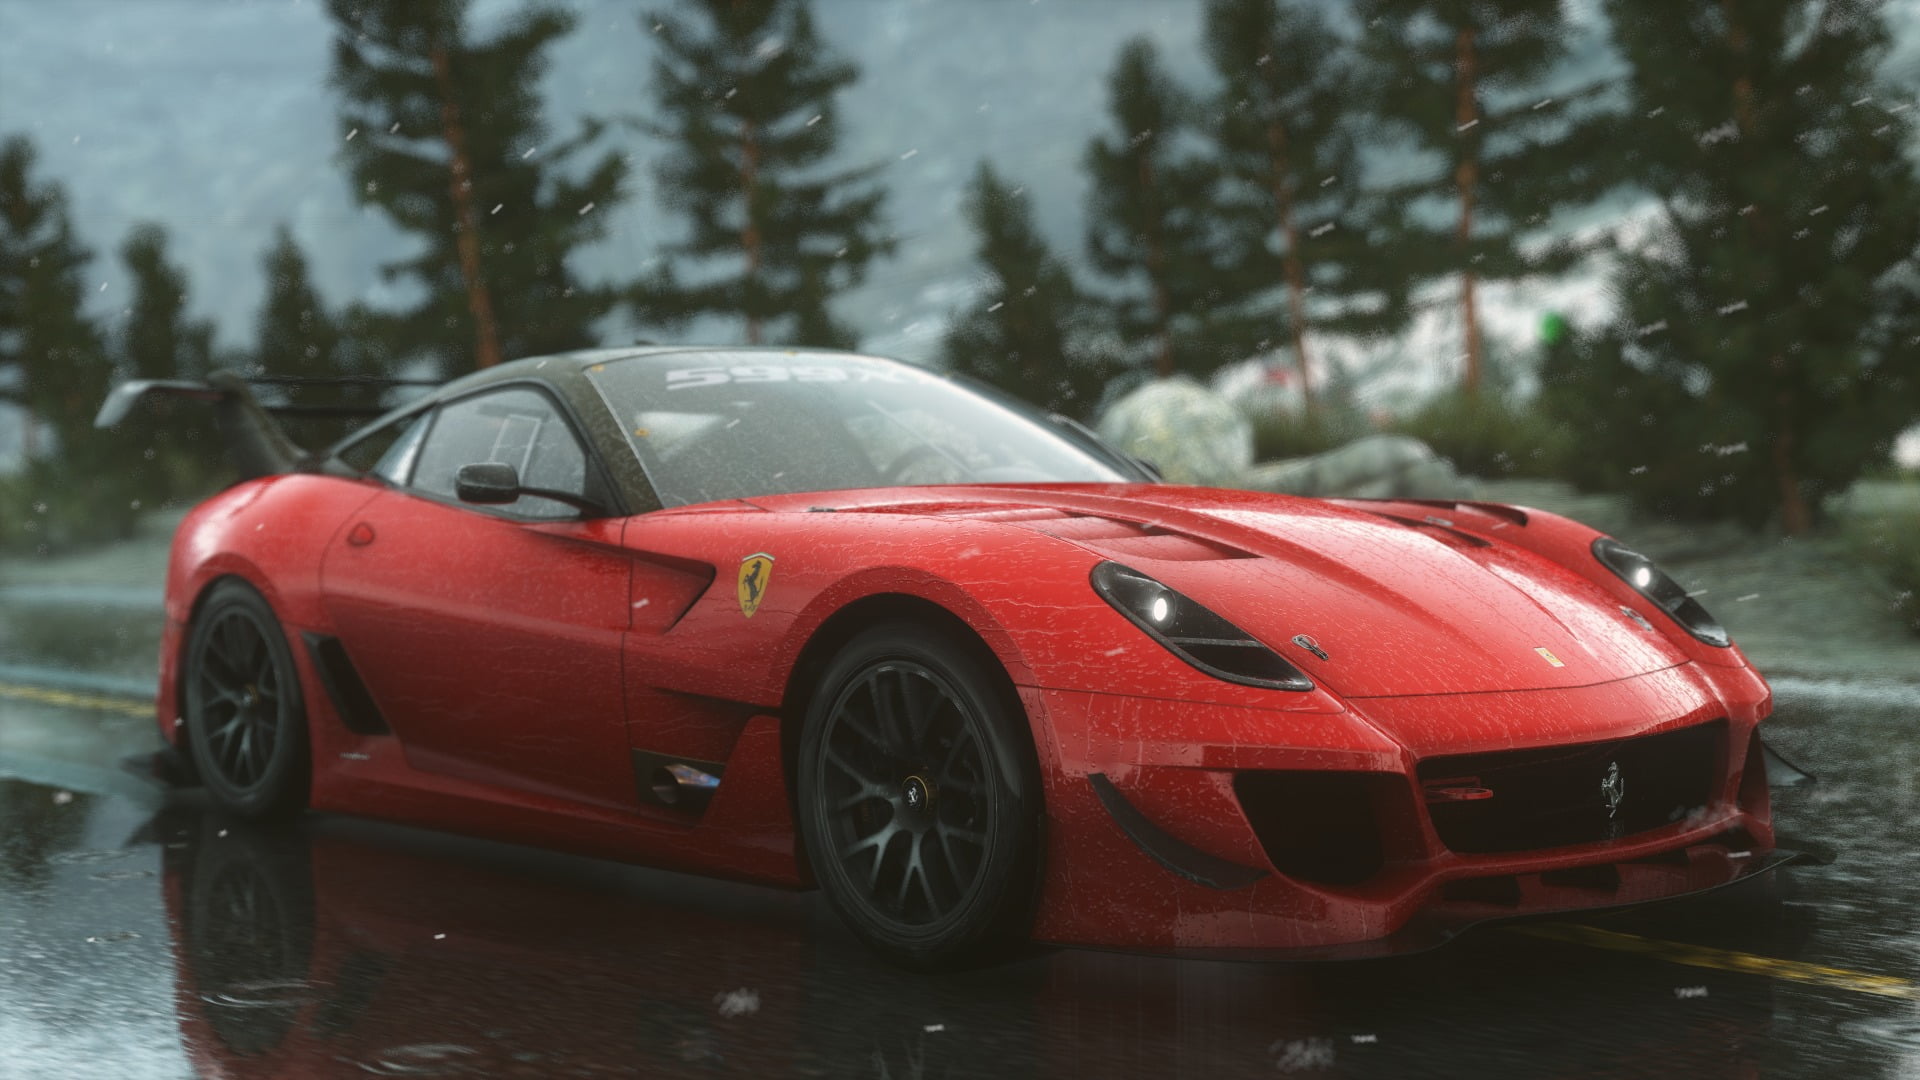 red Ferrari sports car, Driveclub, race cars, video games, motor vehicle